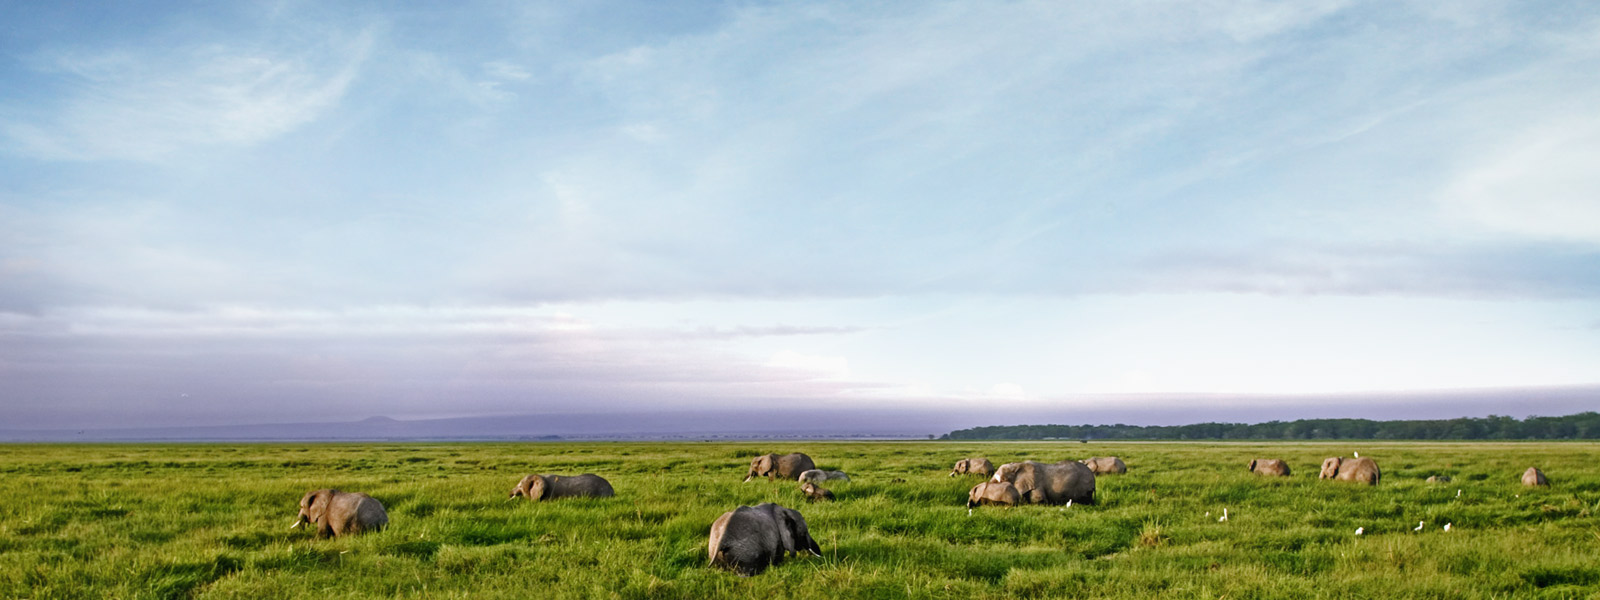 numerous elephants in a grass landscape